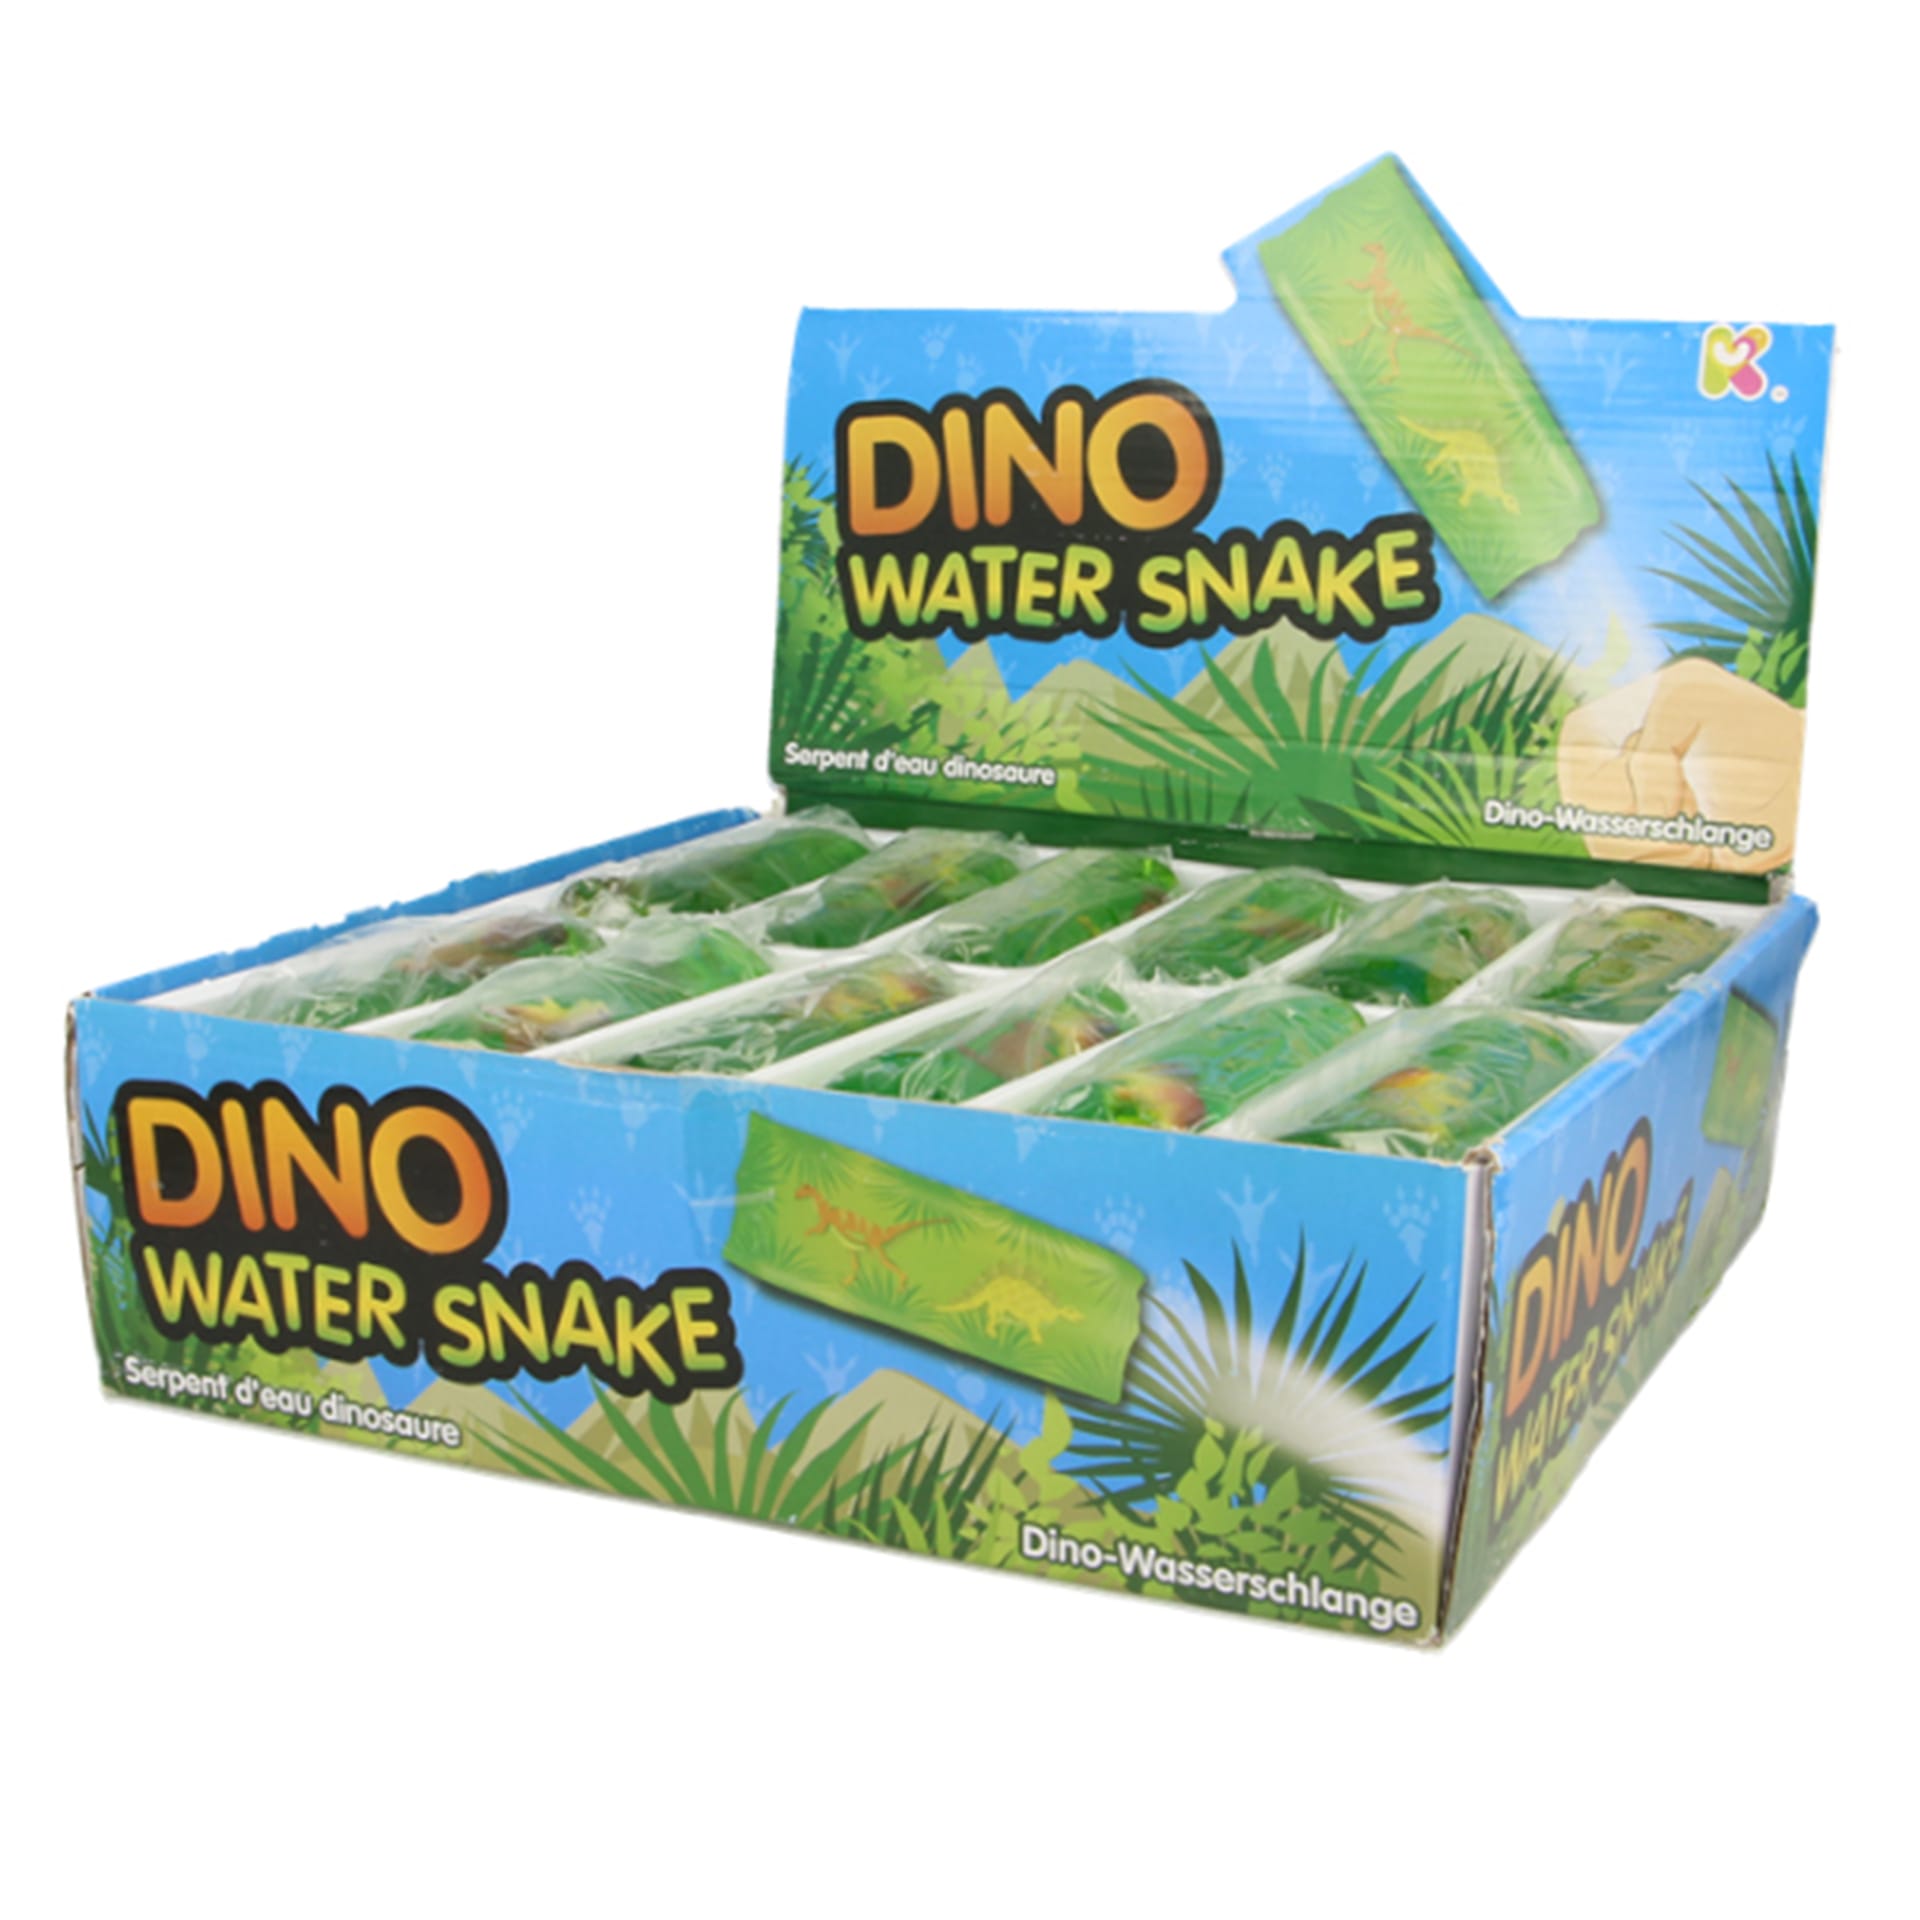 Dinosaur Water Snakes